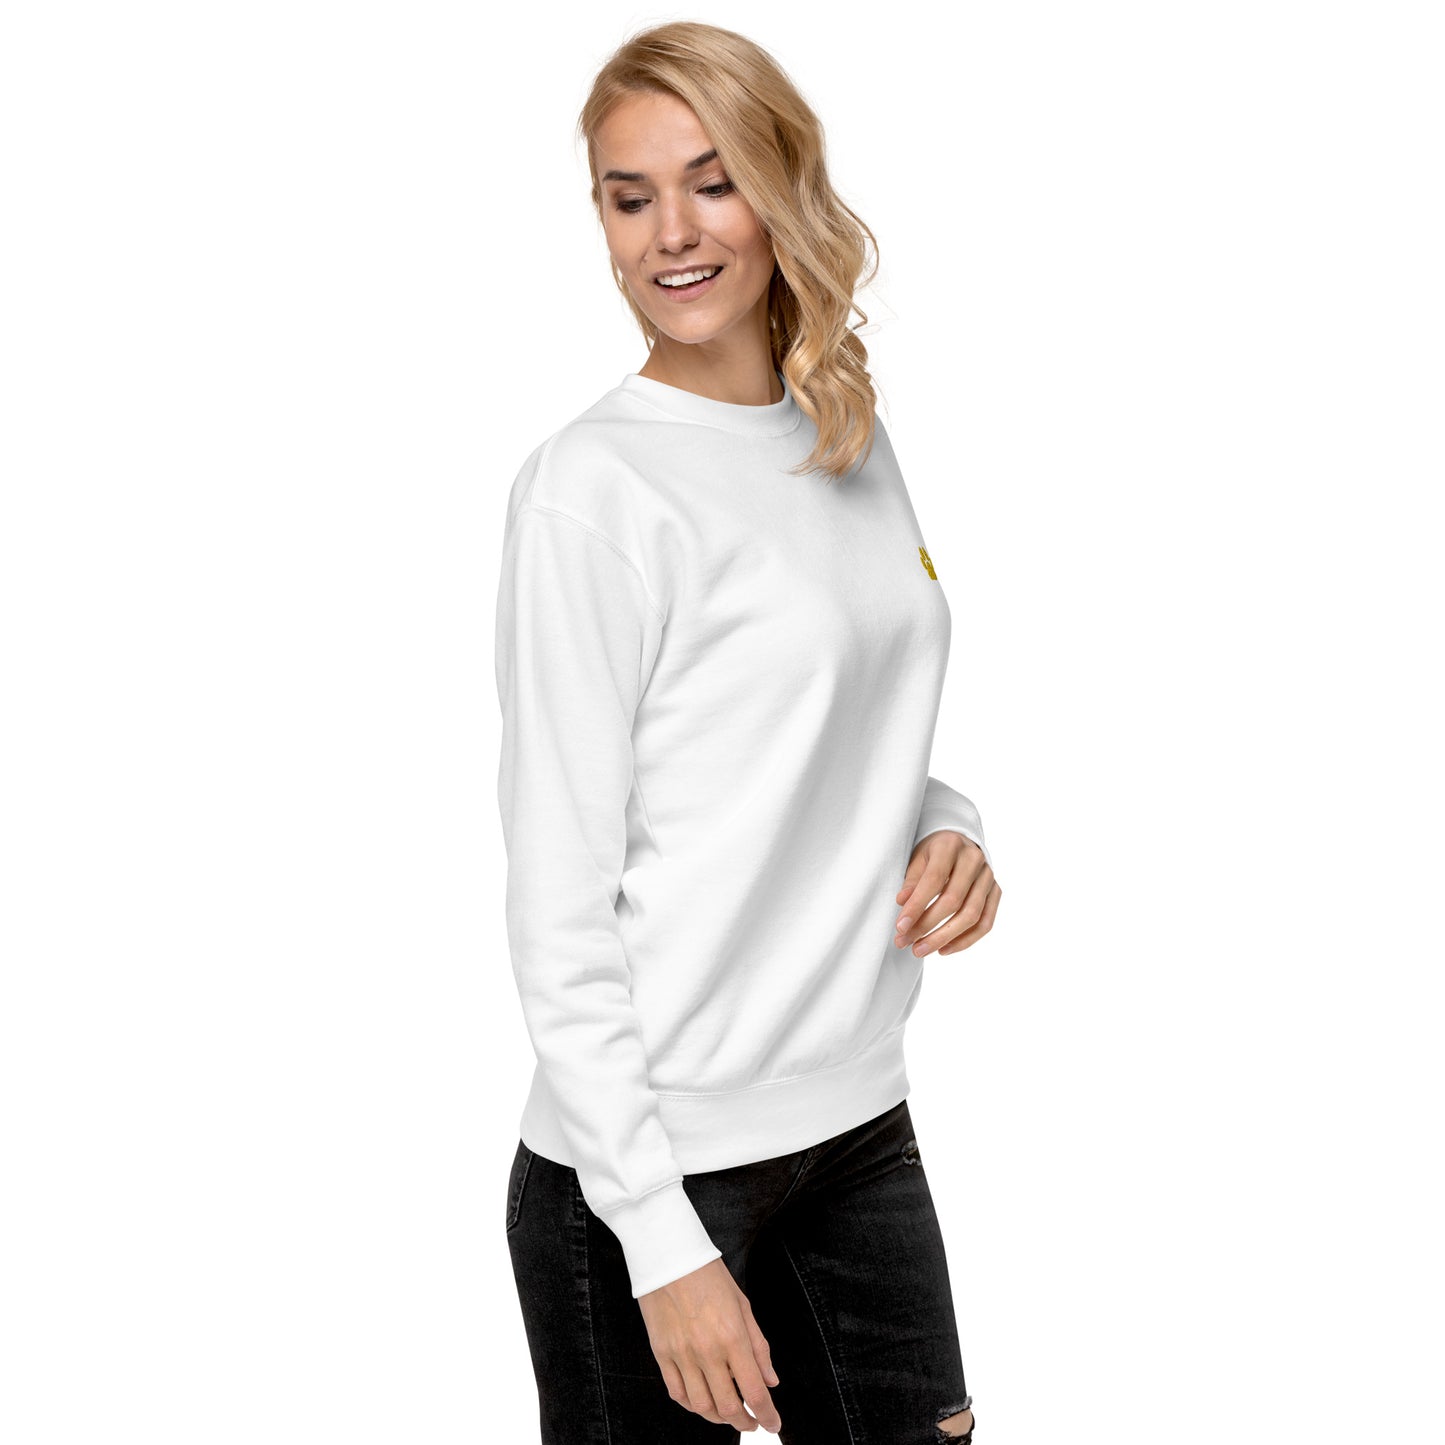 Dawg In DeluluLand - Unisex Premium Sweatshirt